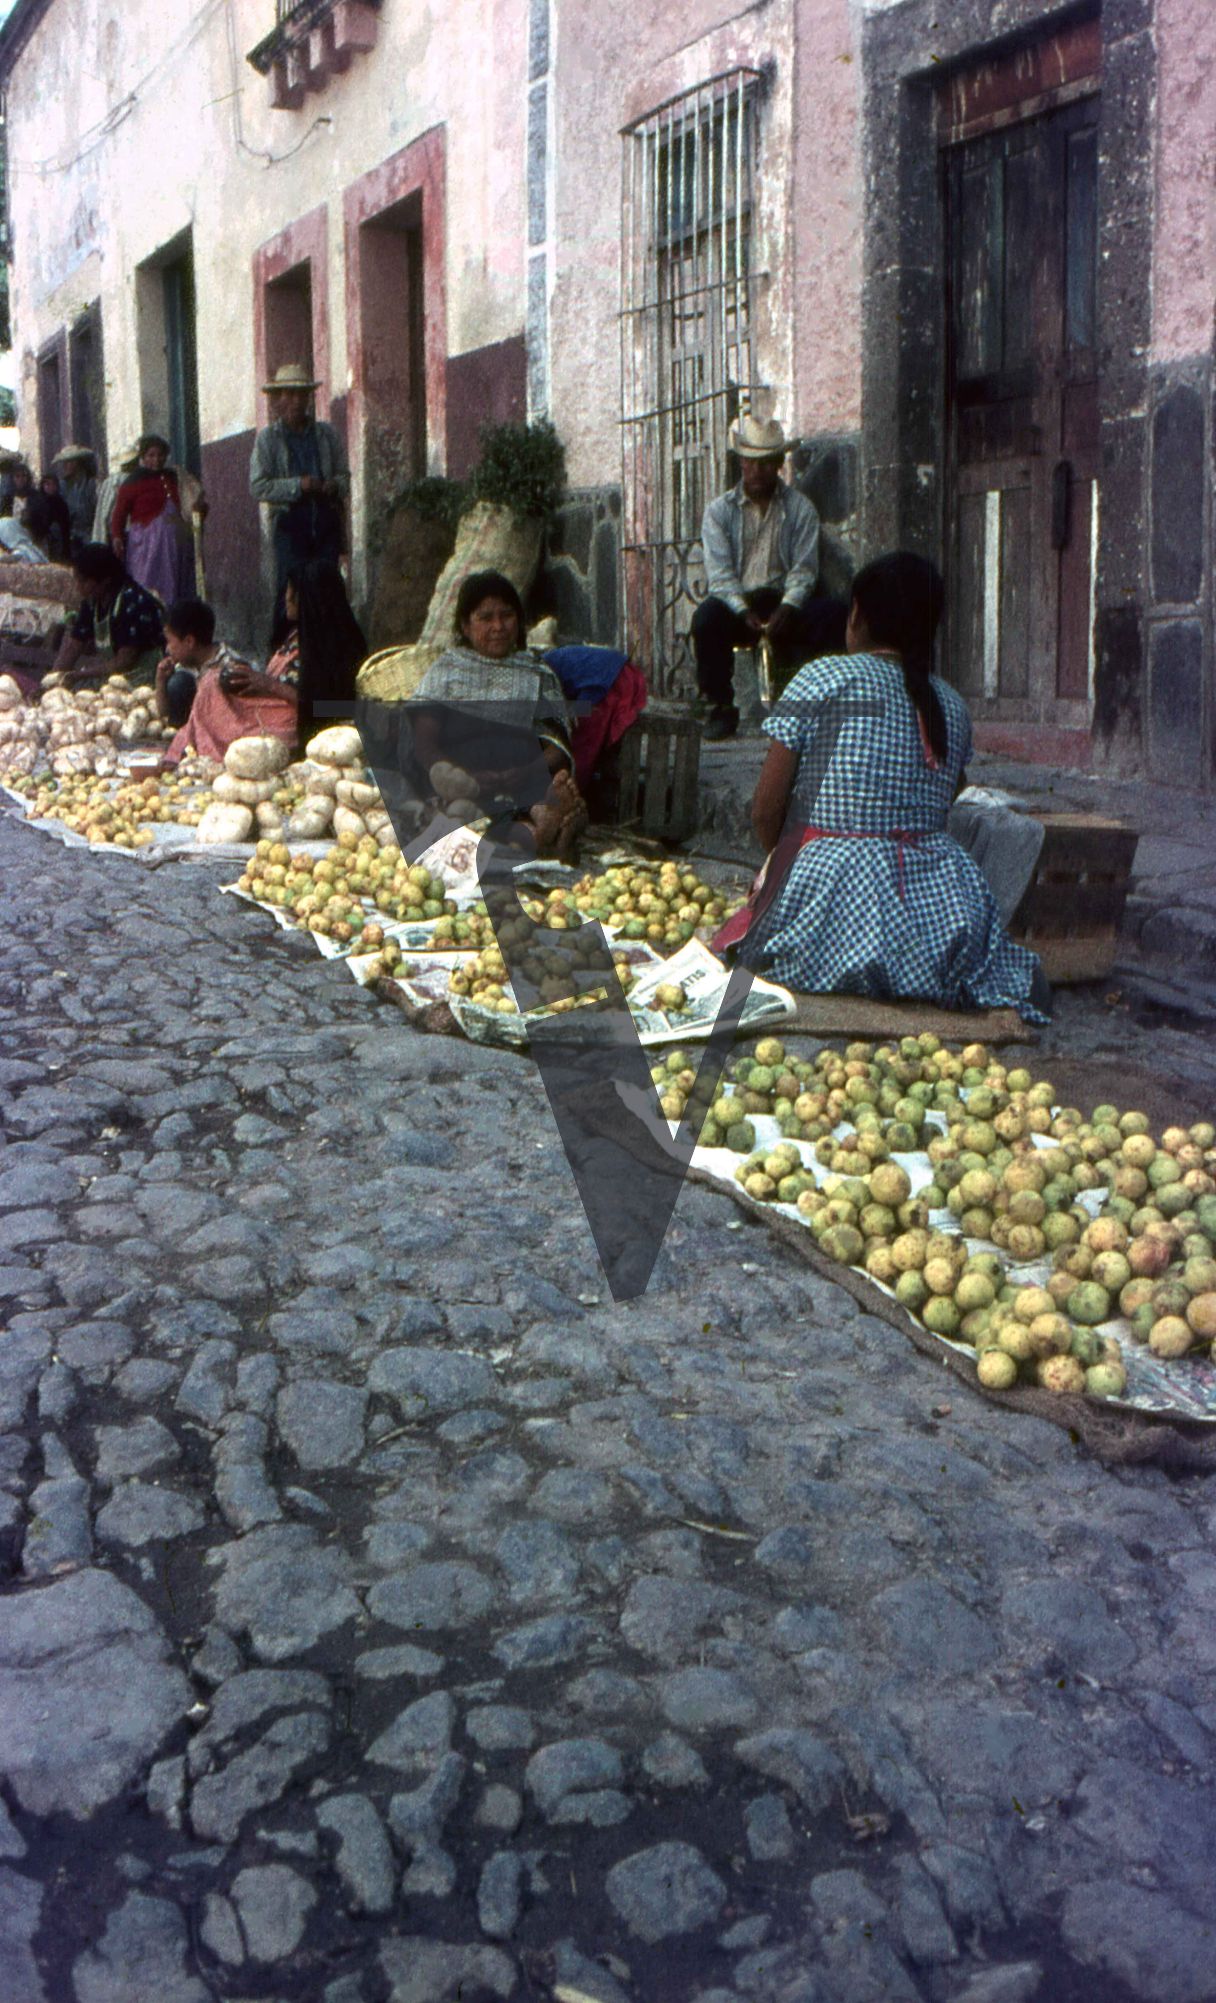 Mexico, Fruit market on the street.